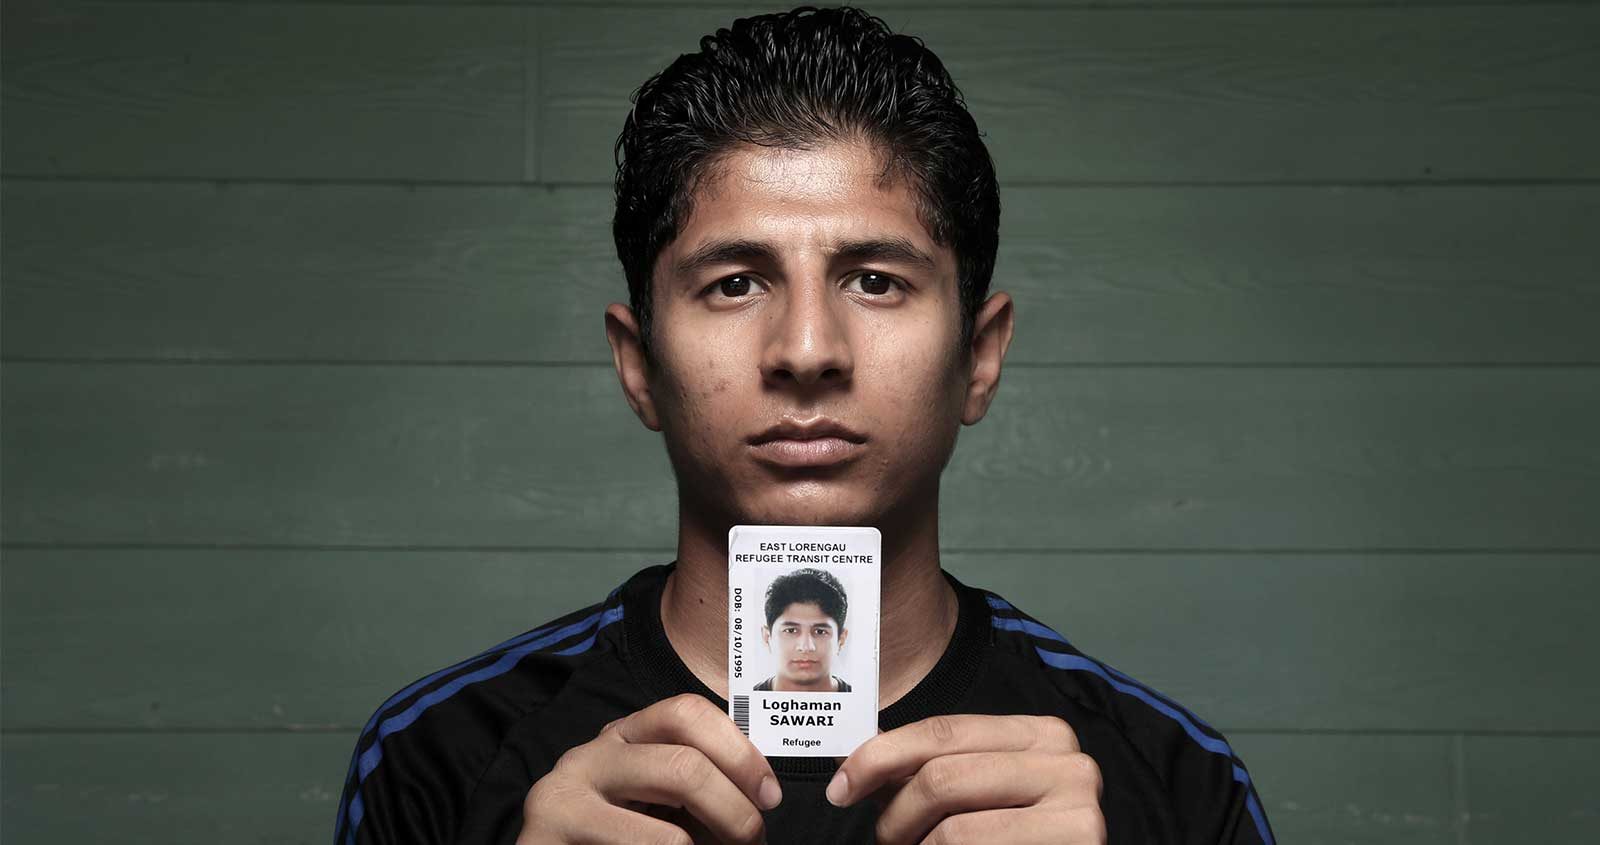 Refugee Loghaman Sawari holding an ID card